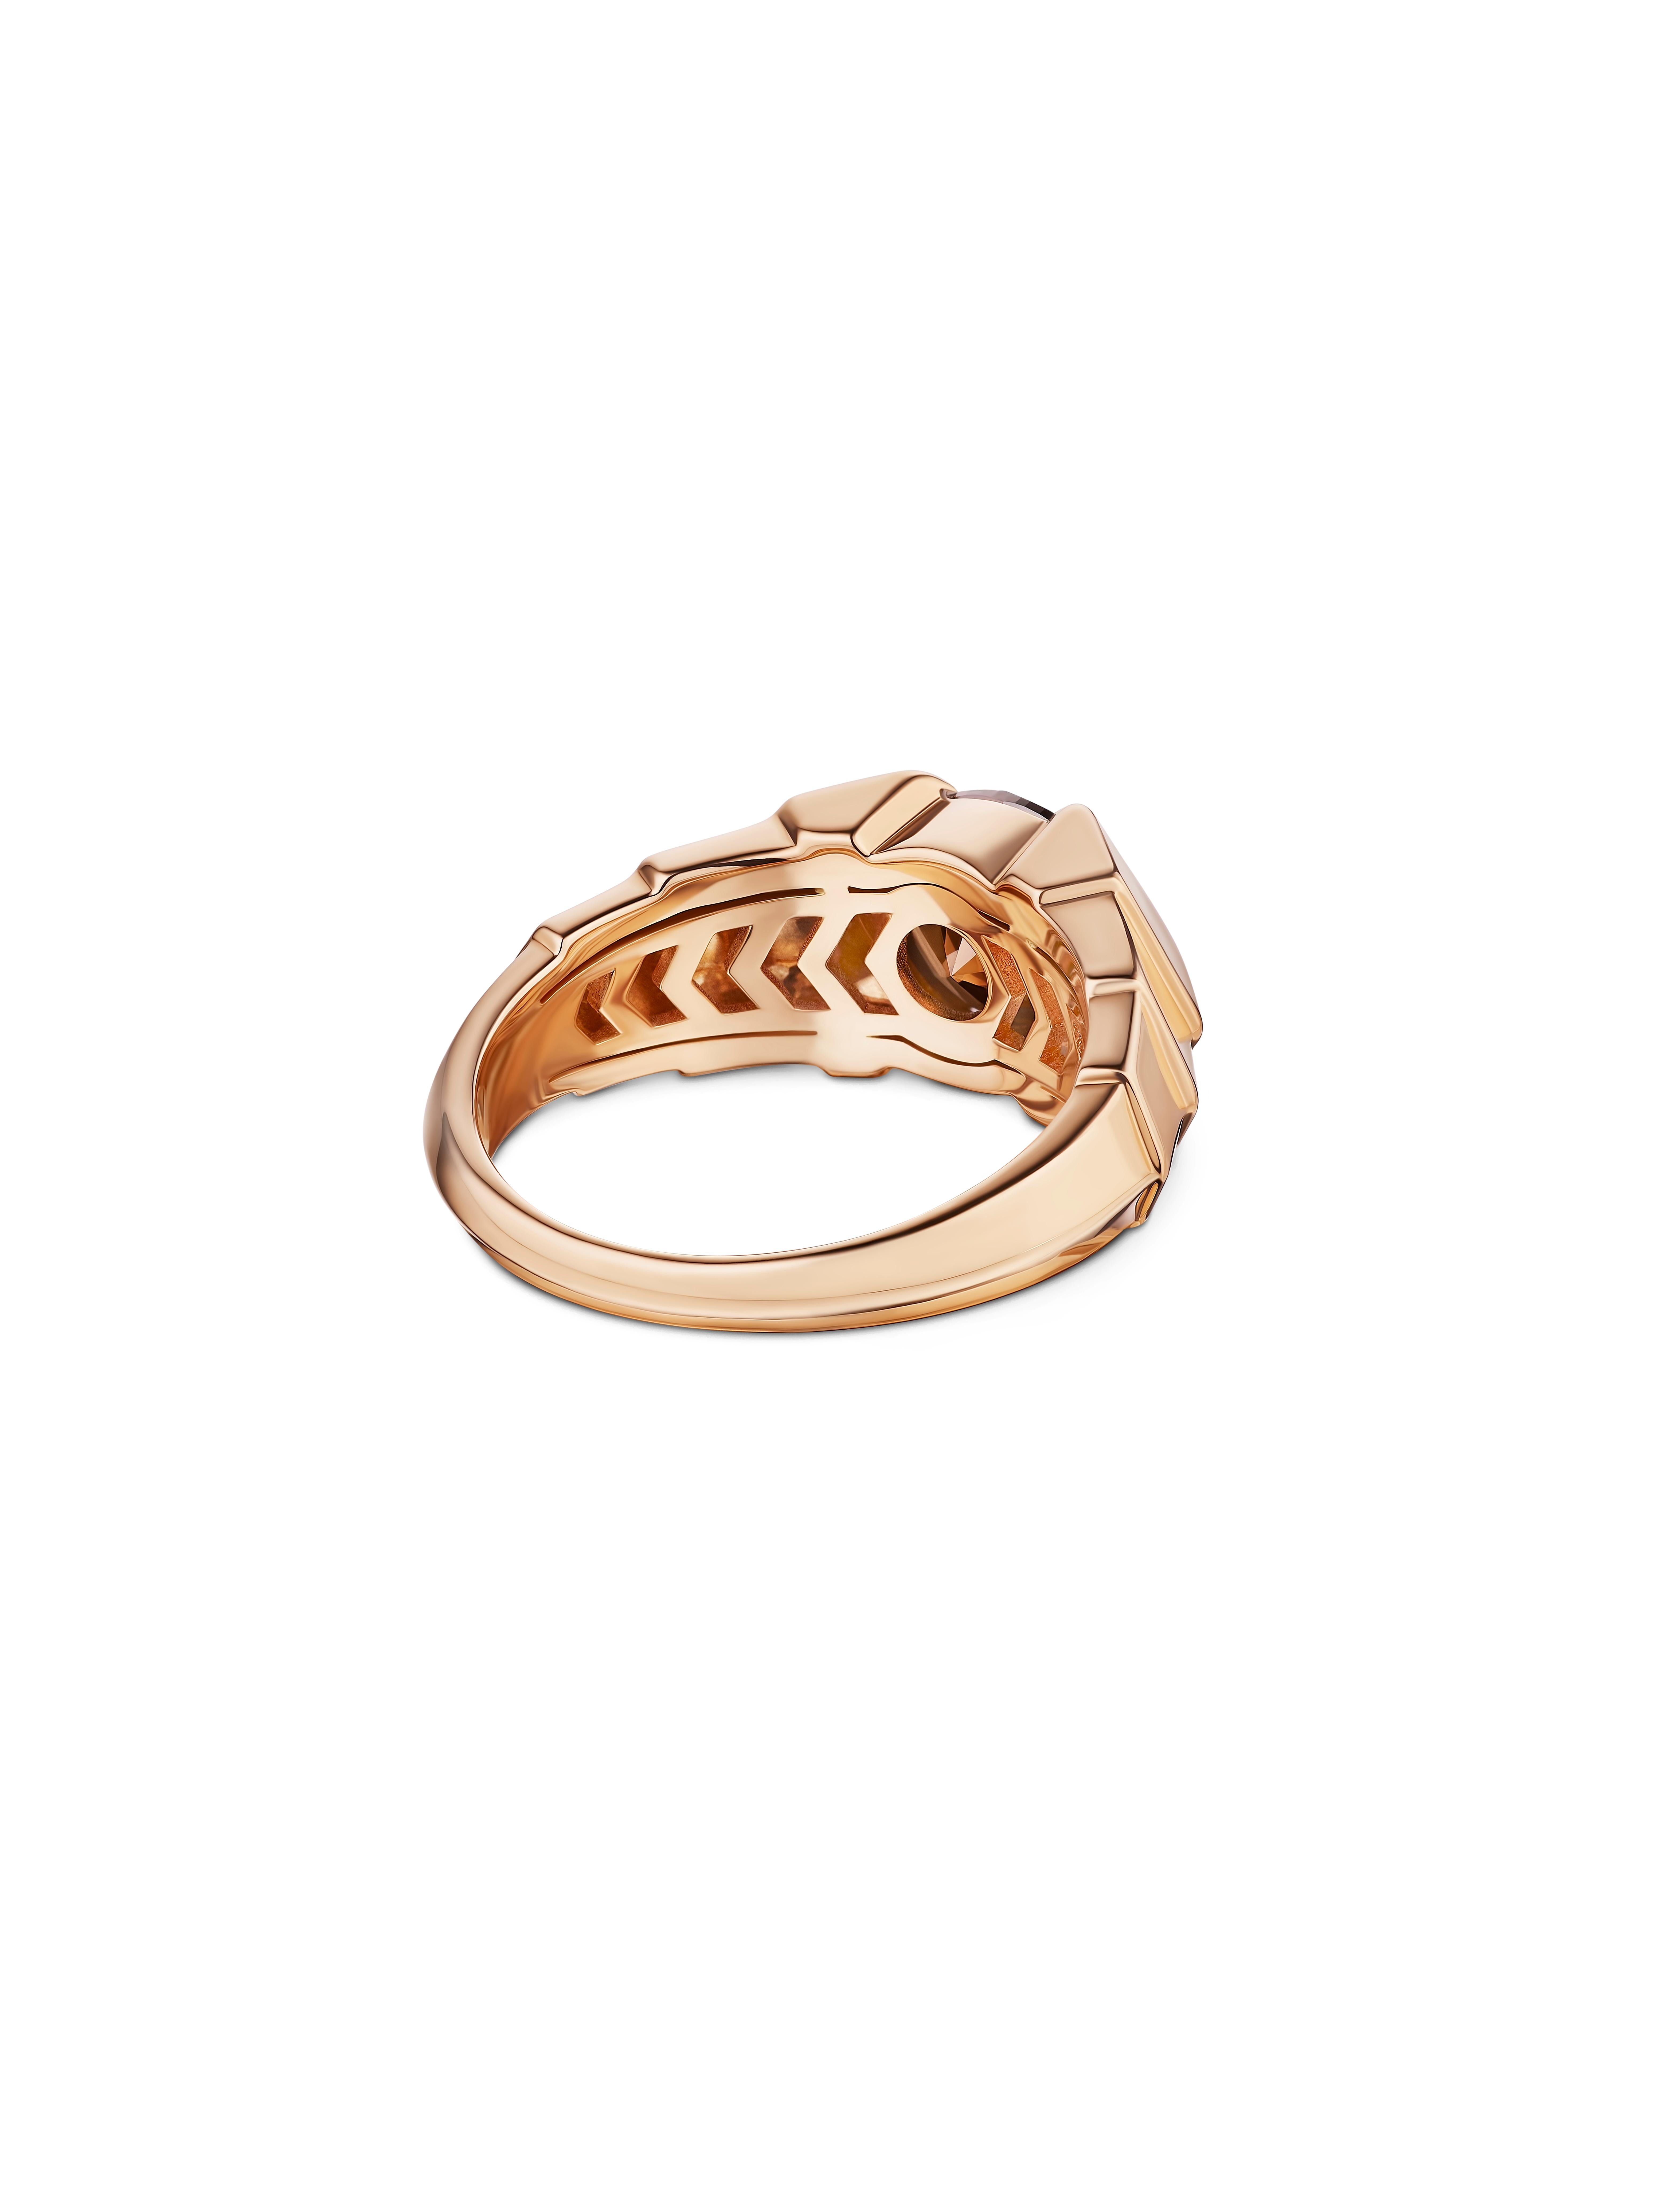 For Sale:  VL Cepher Brown Diamond 18K Rose Gold Arris Large Ring 2